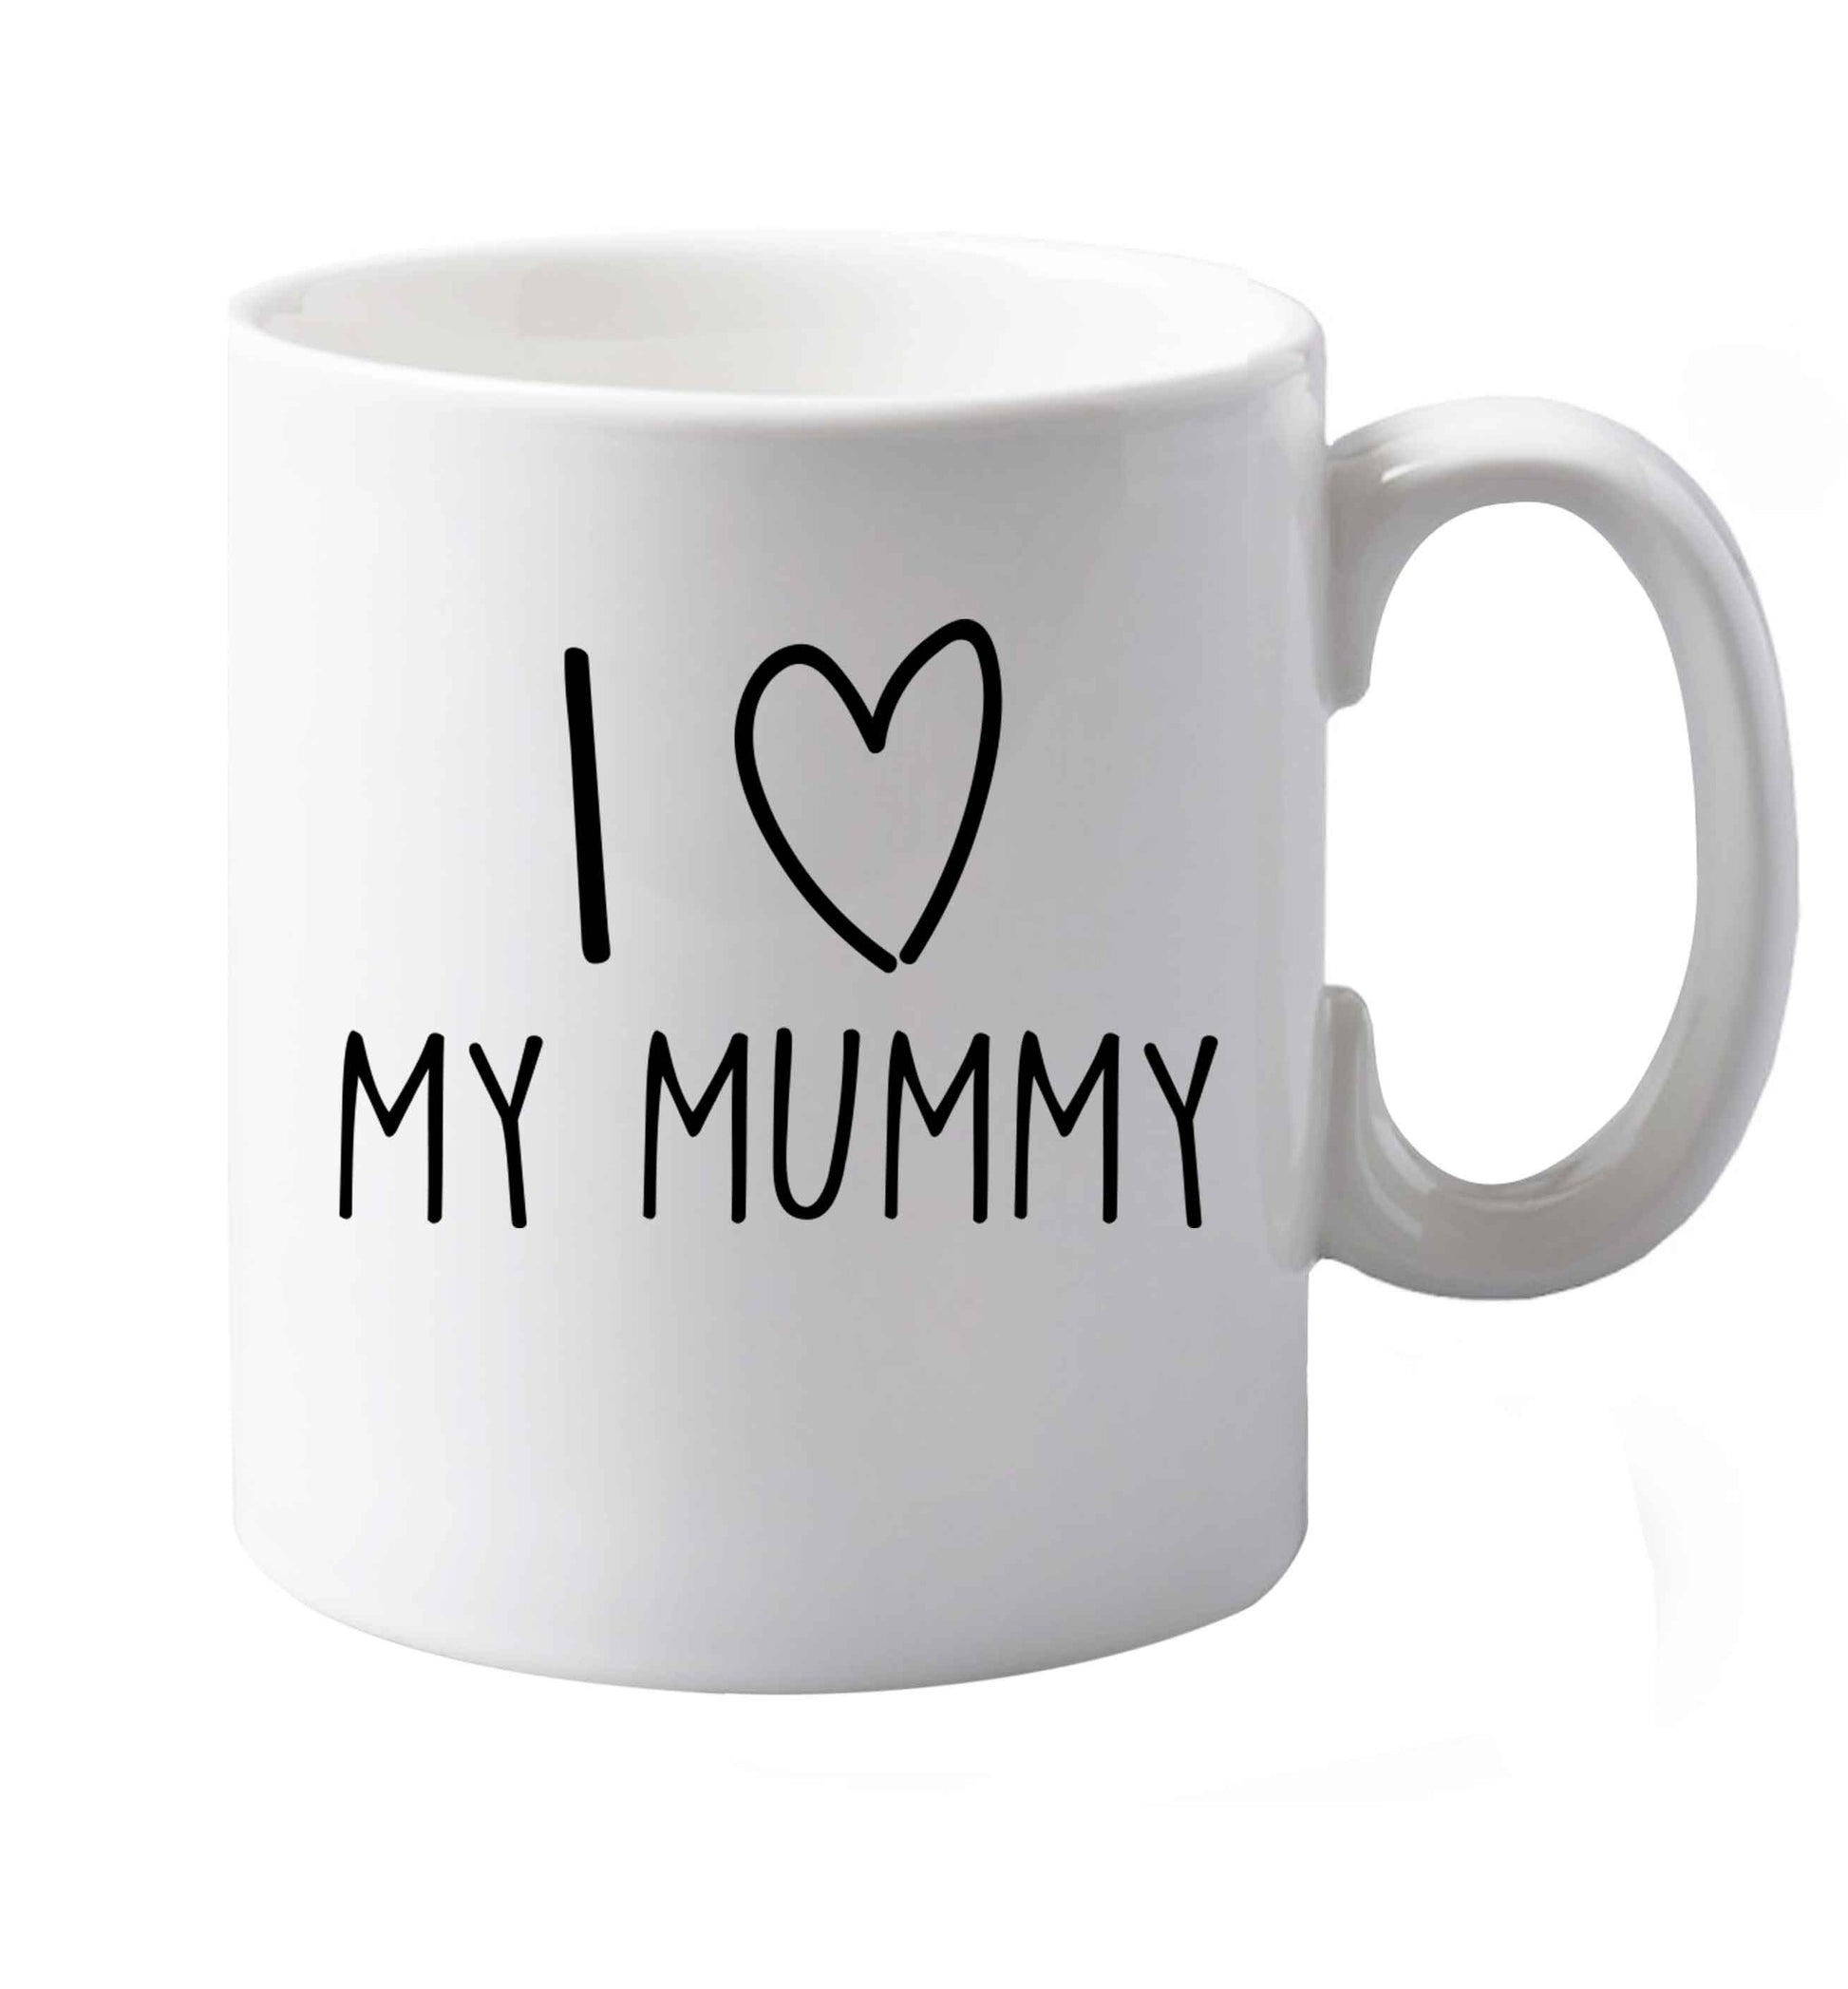 10 oz I love my mummy ceramic mug both sides